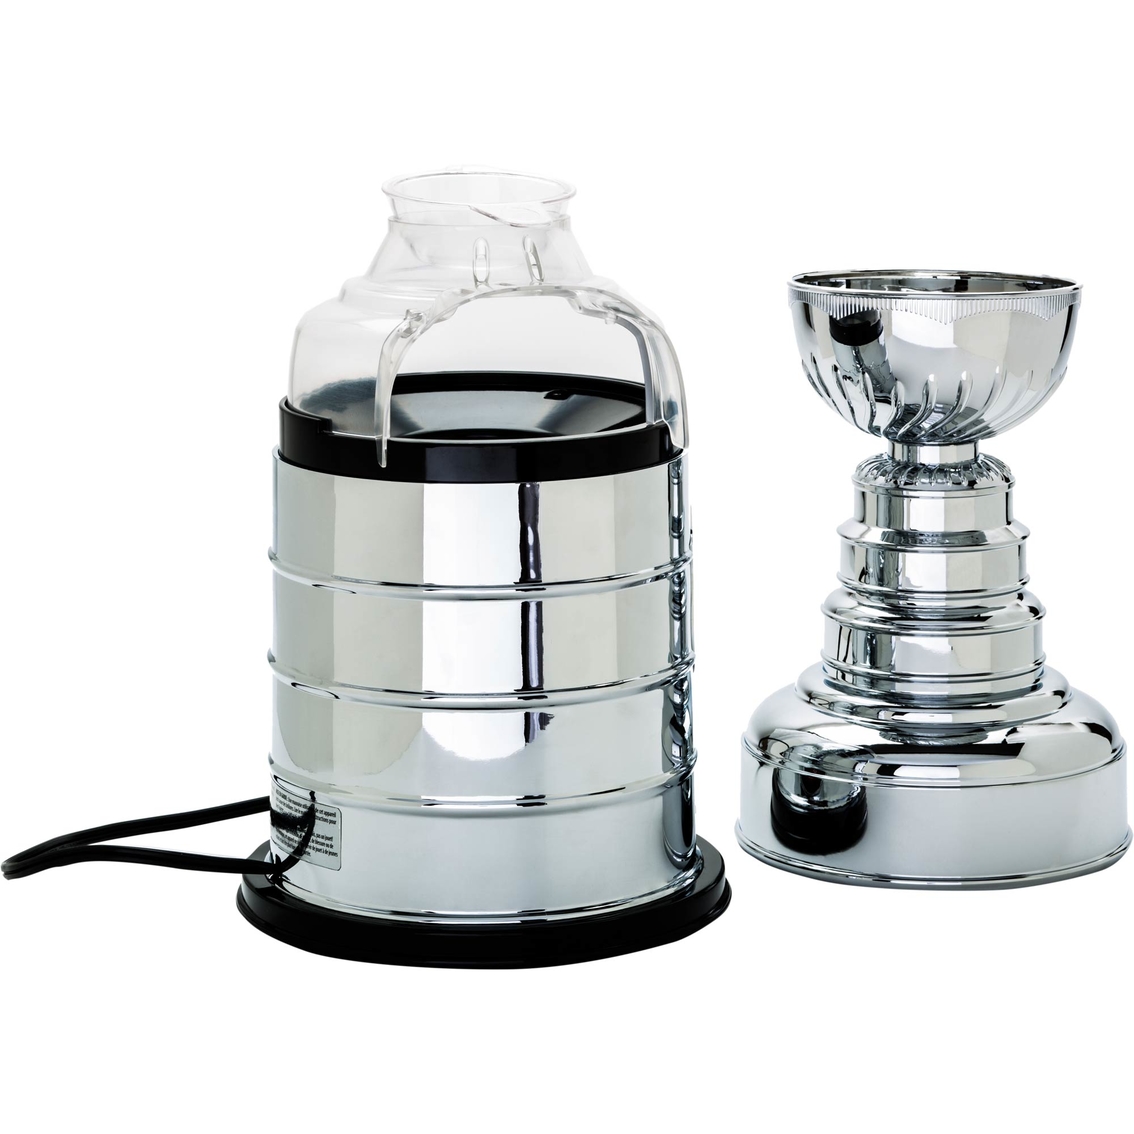 Stanley Cup Popcorn Maker - Image 2 of 4